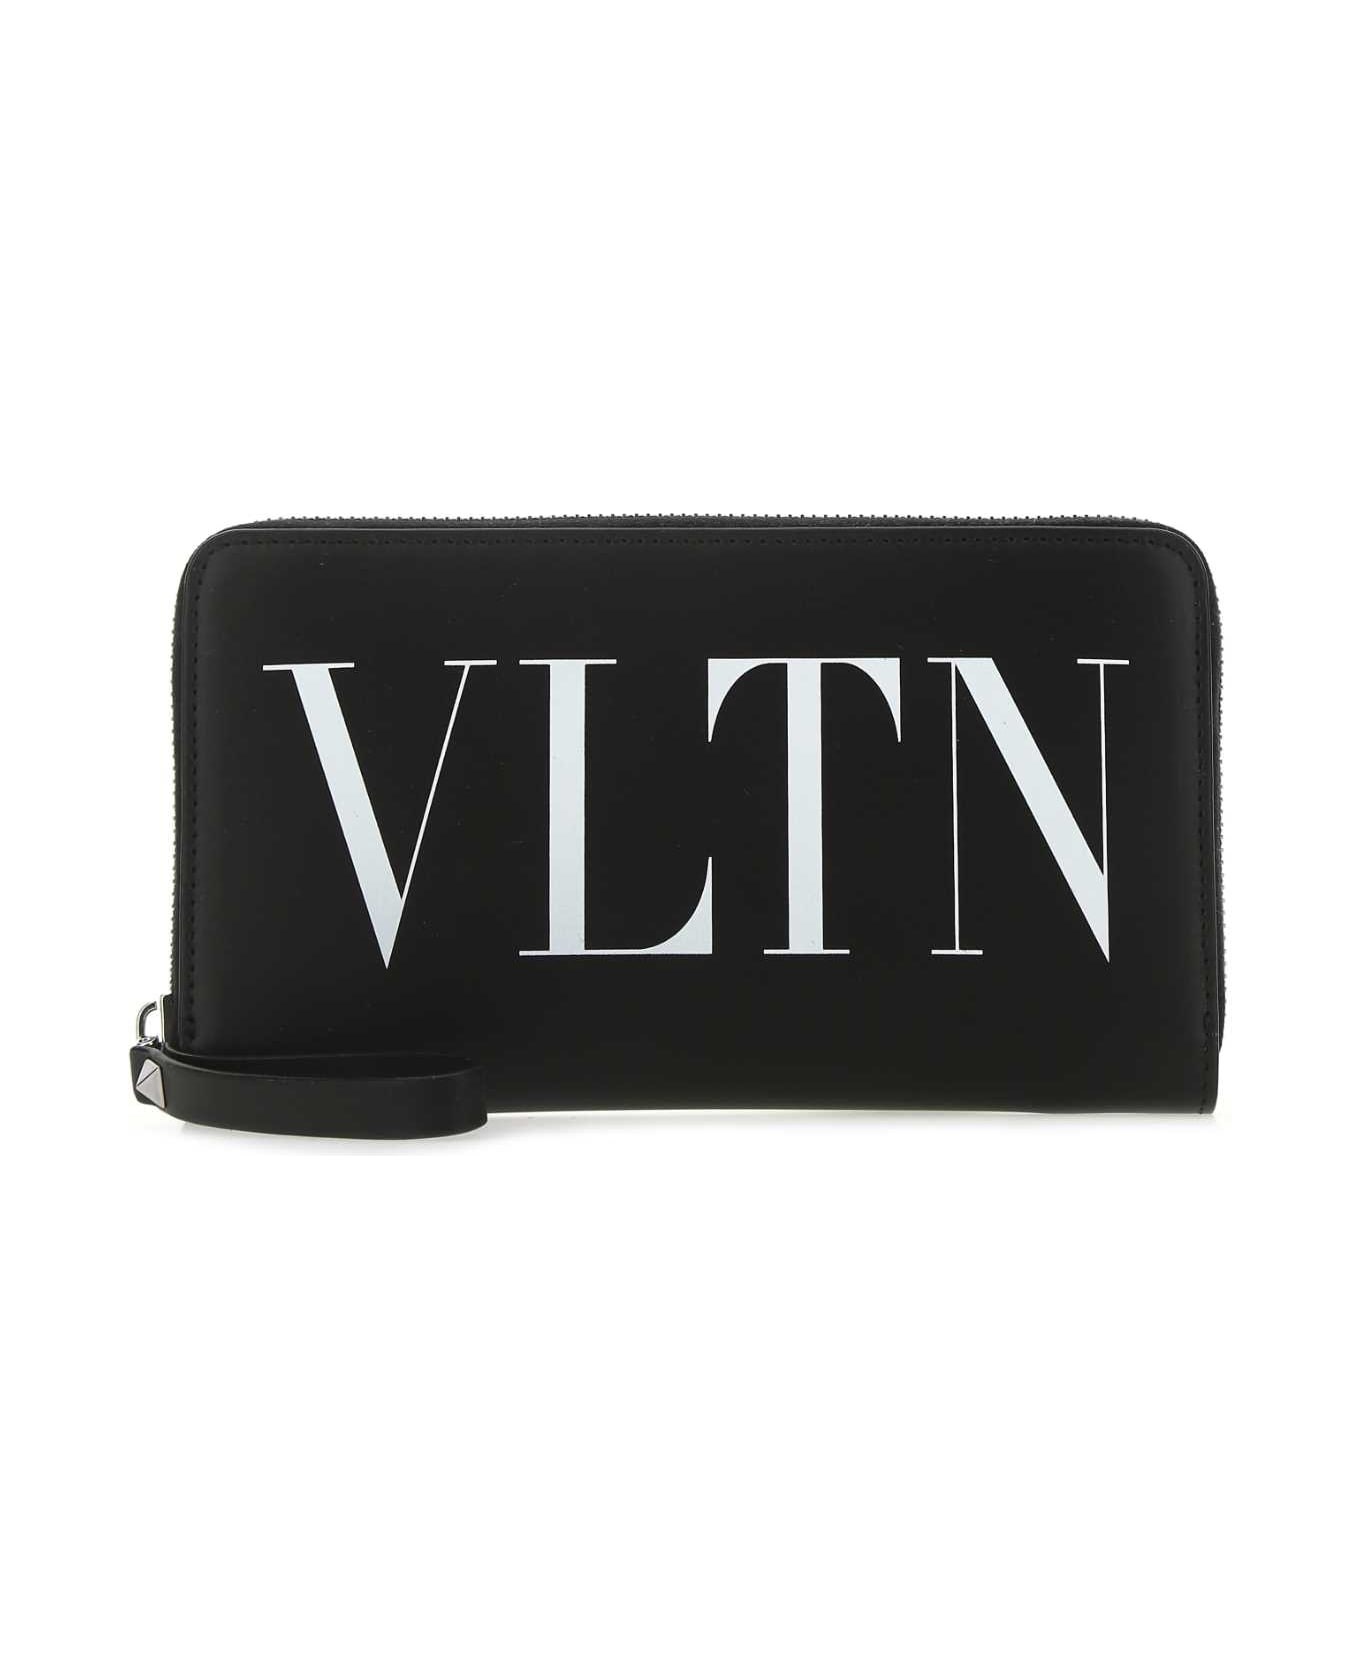 Valentino Garavani Black Leather Vltn Wallet - NEROBIANCO